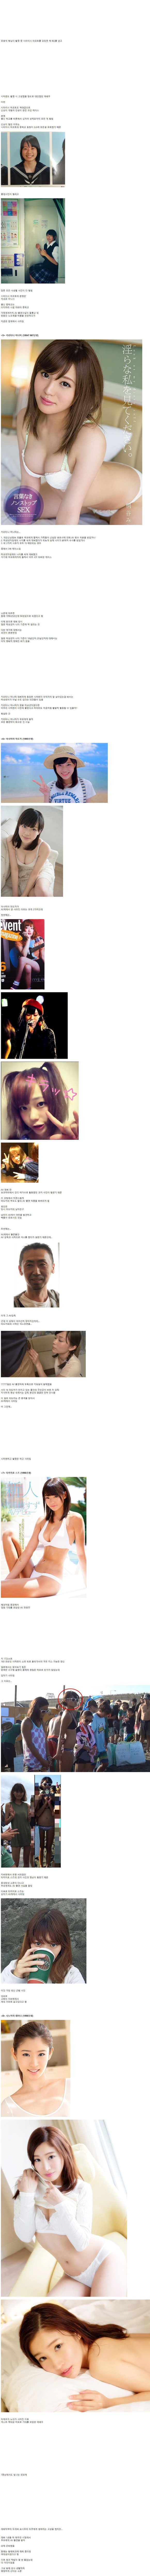 AV Actors Revealed by Parents of Yasu Scene